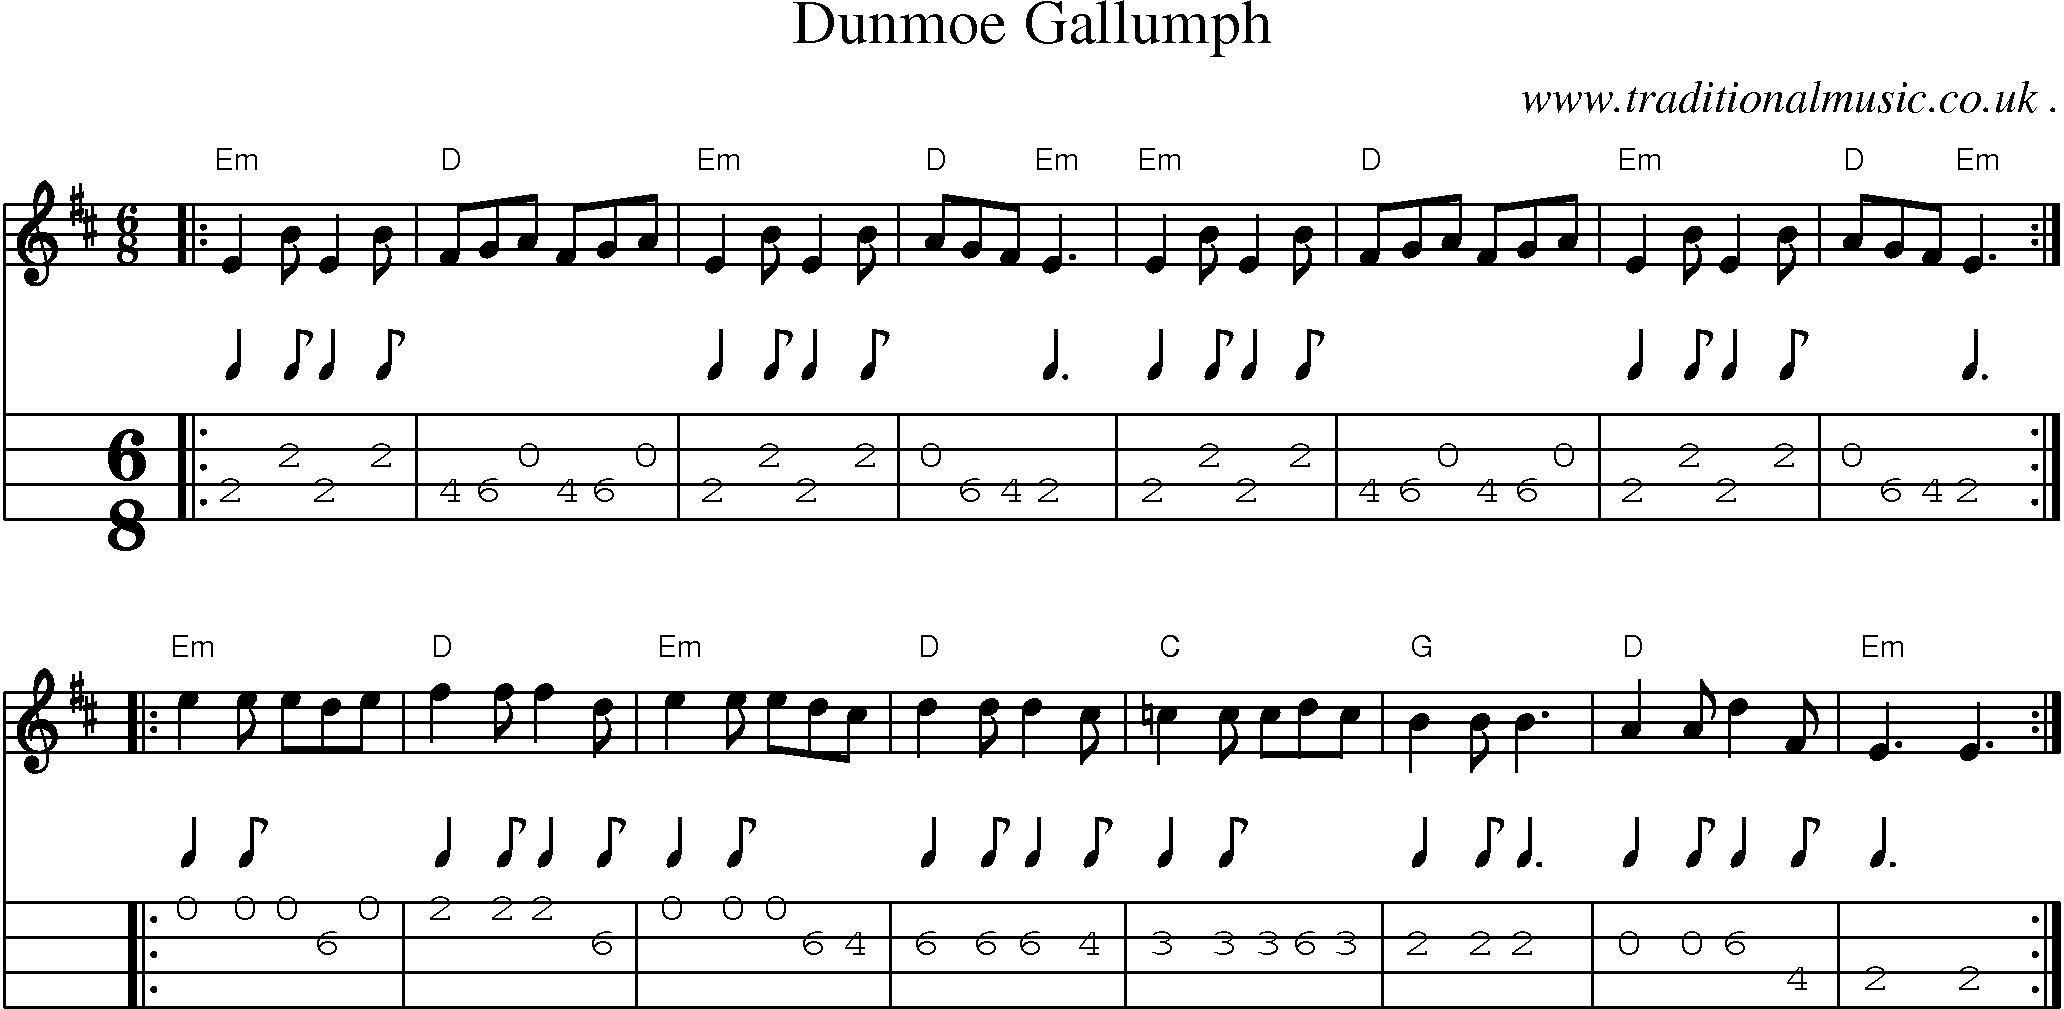 Sheet-music  score, Chords and Mandolin Tabs for Dunmoe Gallumph